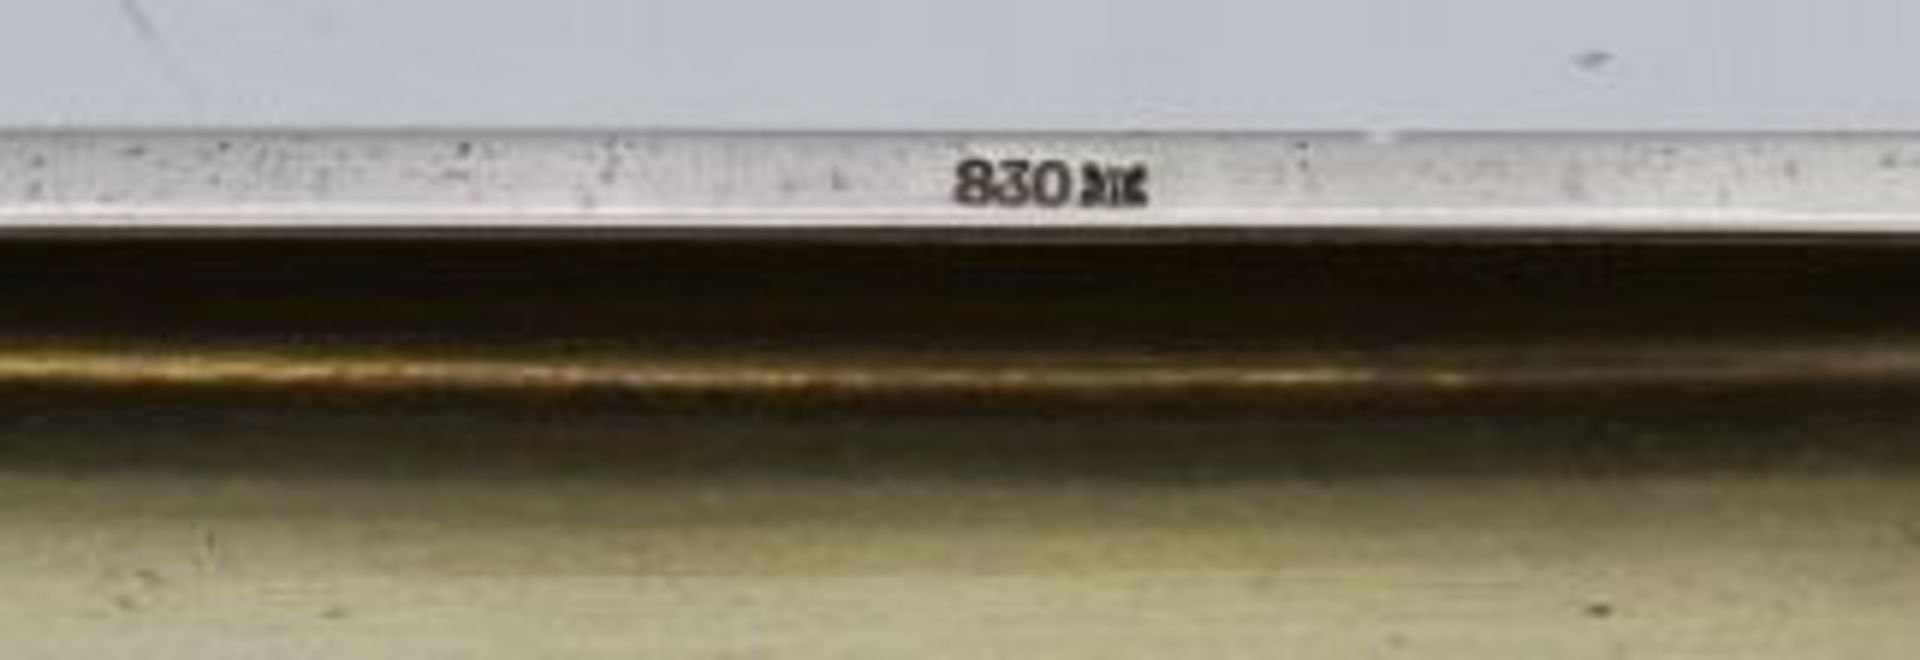 Zigarettenetui, 830er Silber, 126,5gr., innen Widmung auf französich, datiert 1940, 11 x 8cm. - Bild 4 aus 4